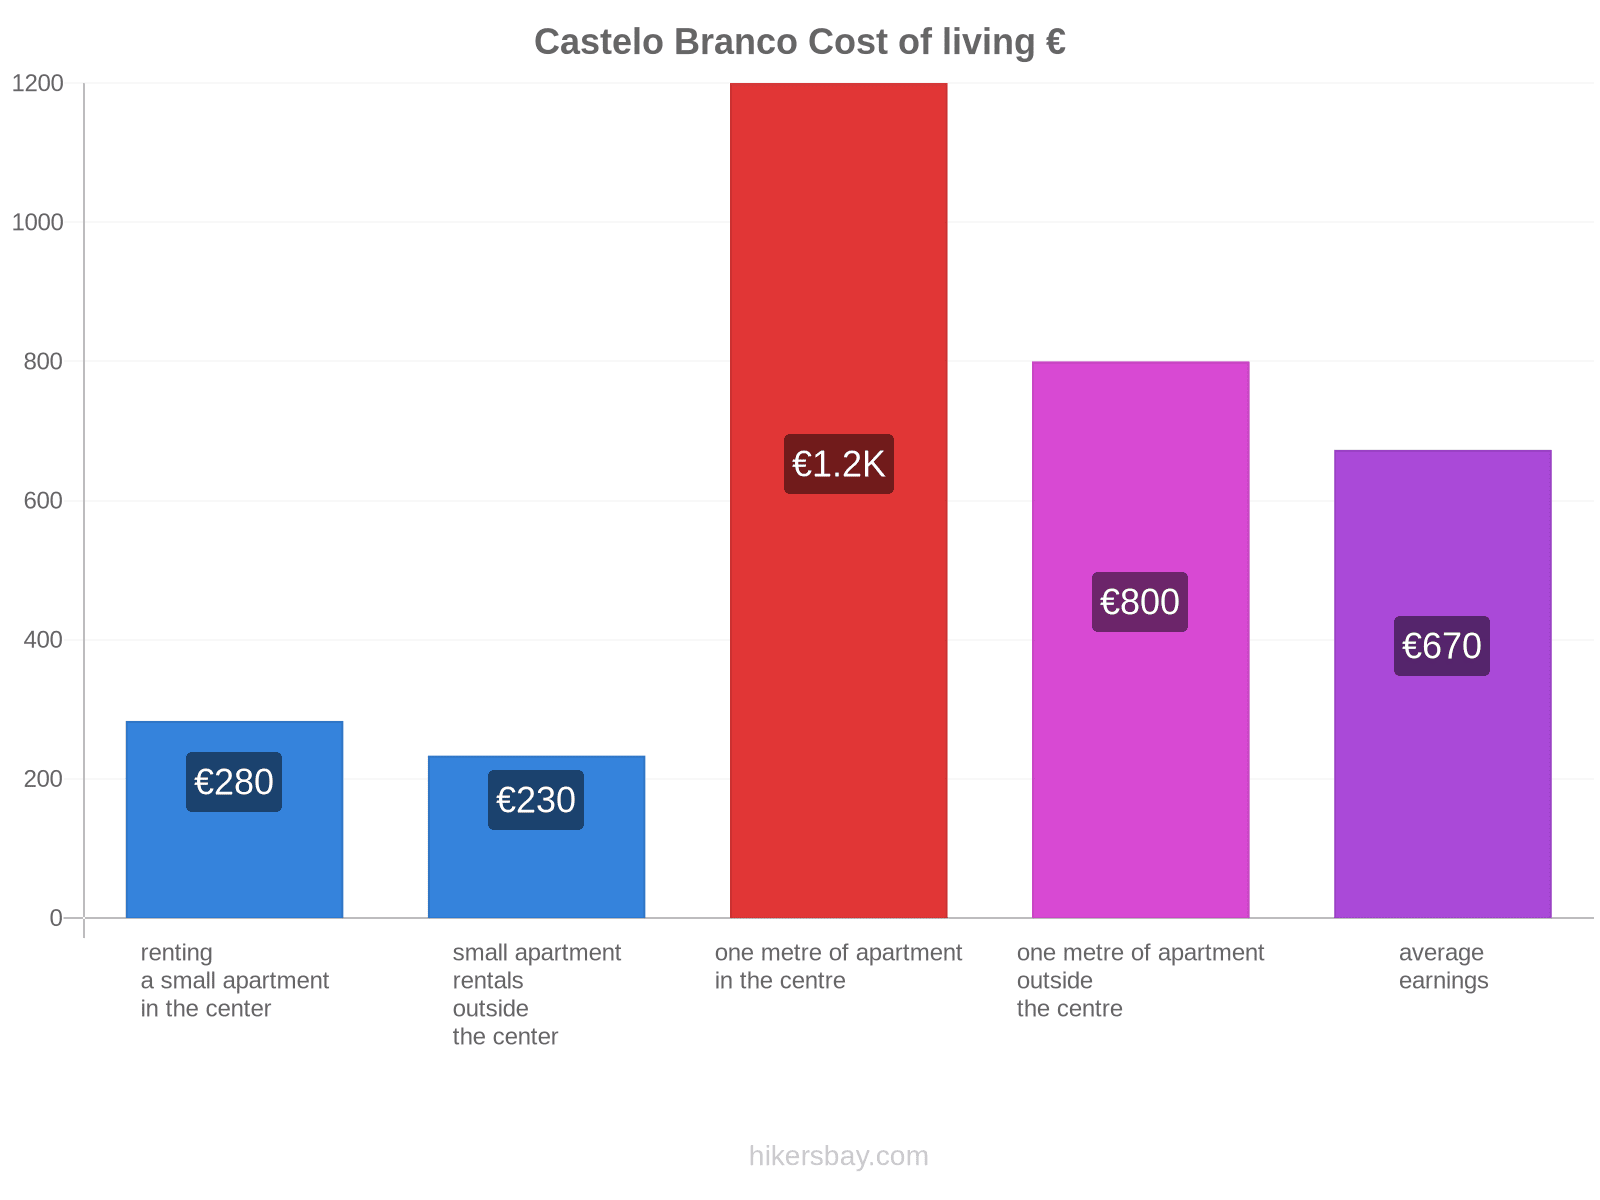 Castelo Branco cost of living hikersbay.com